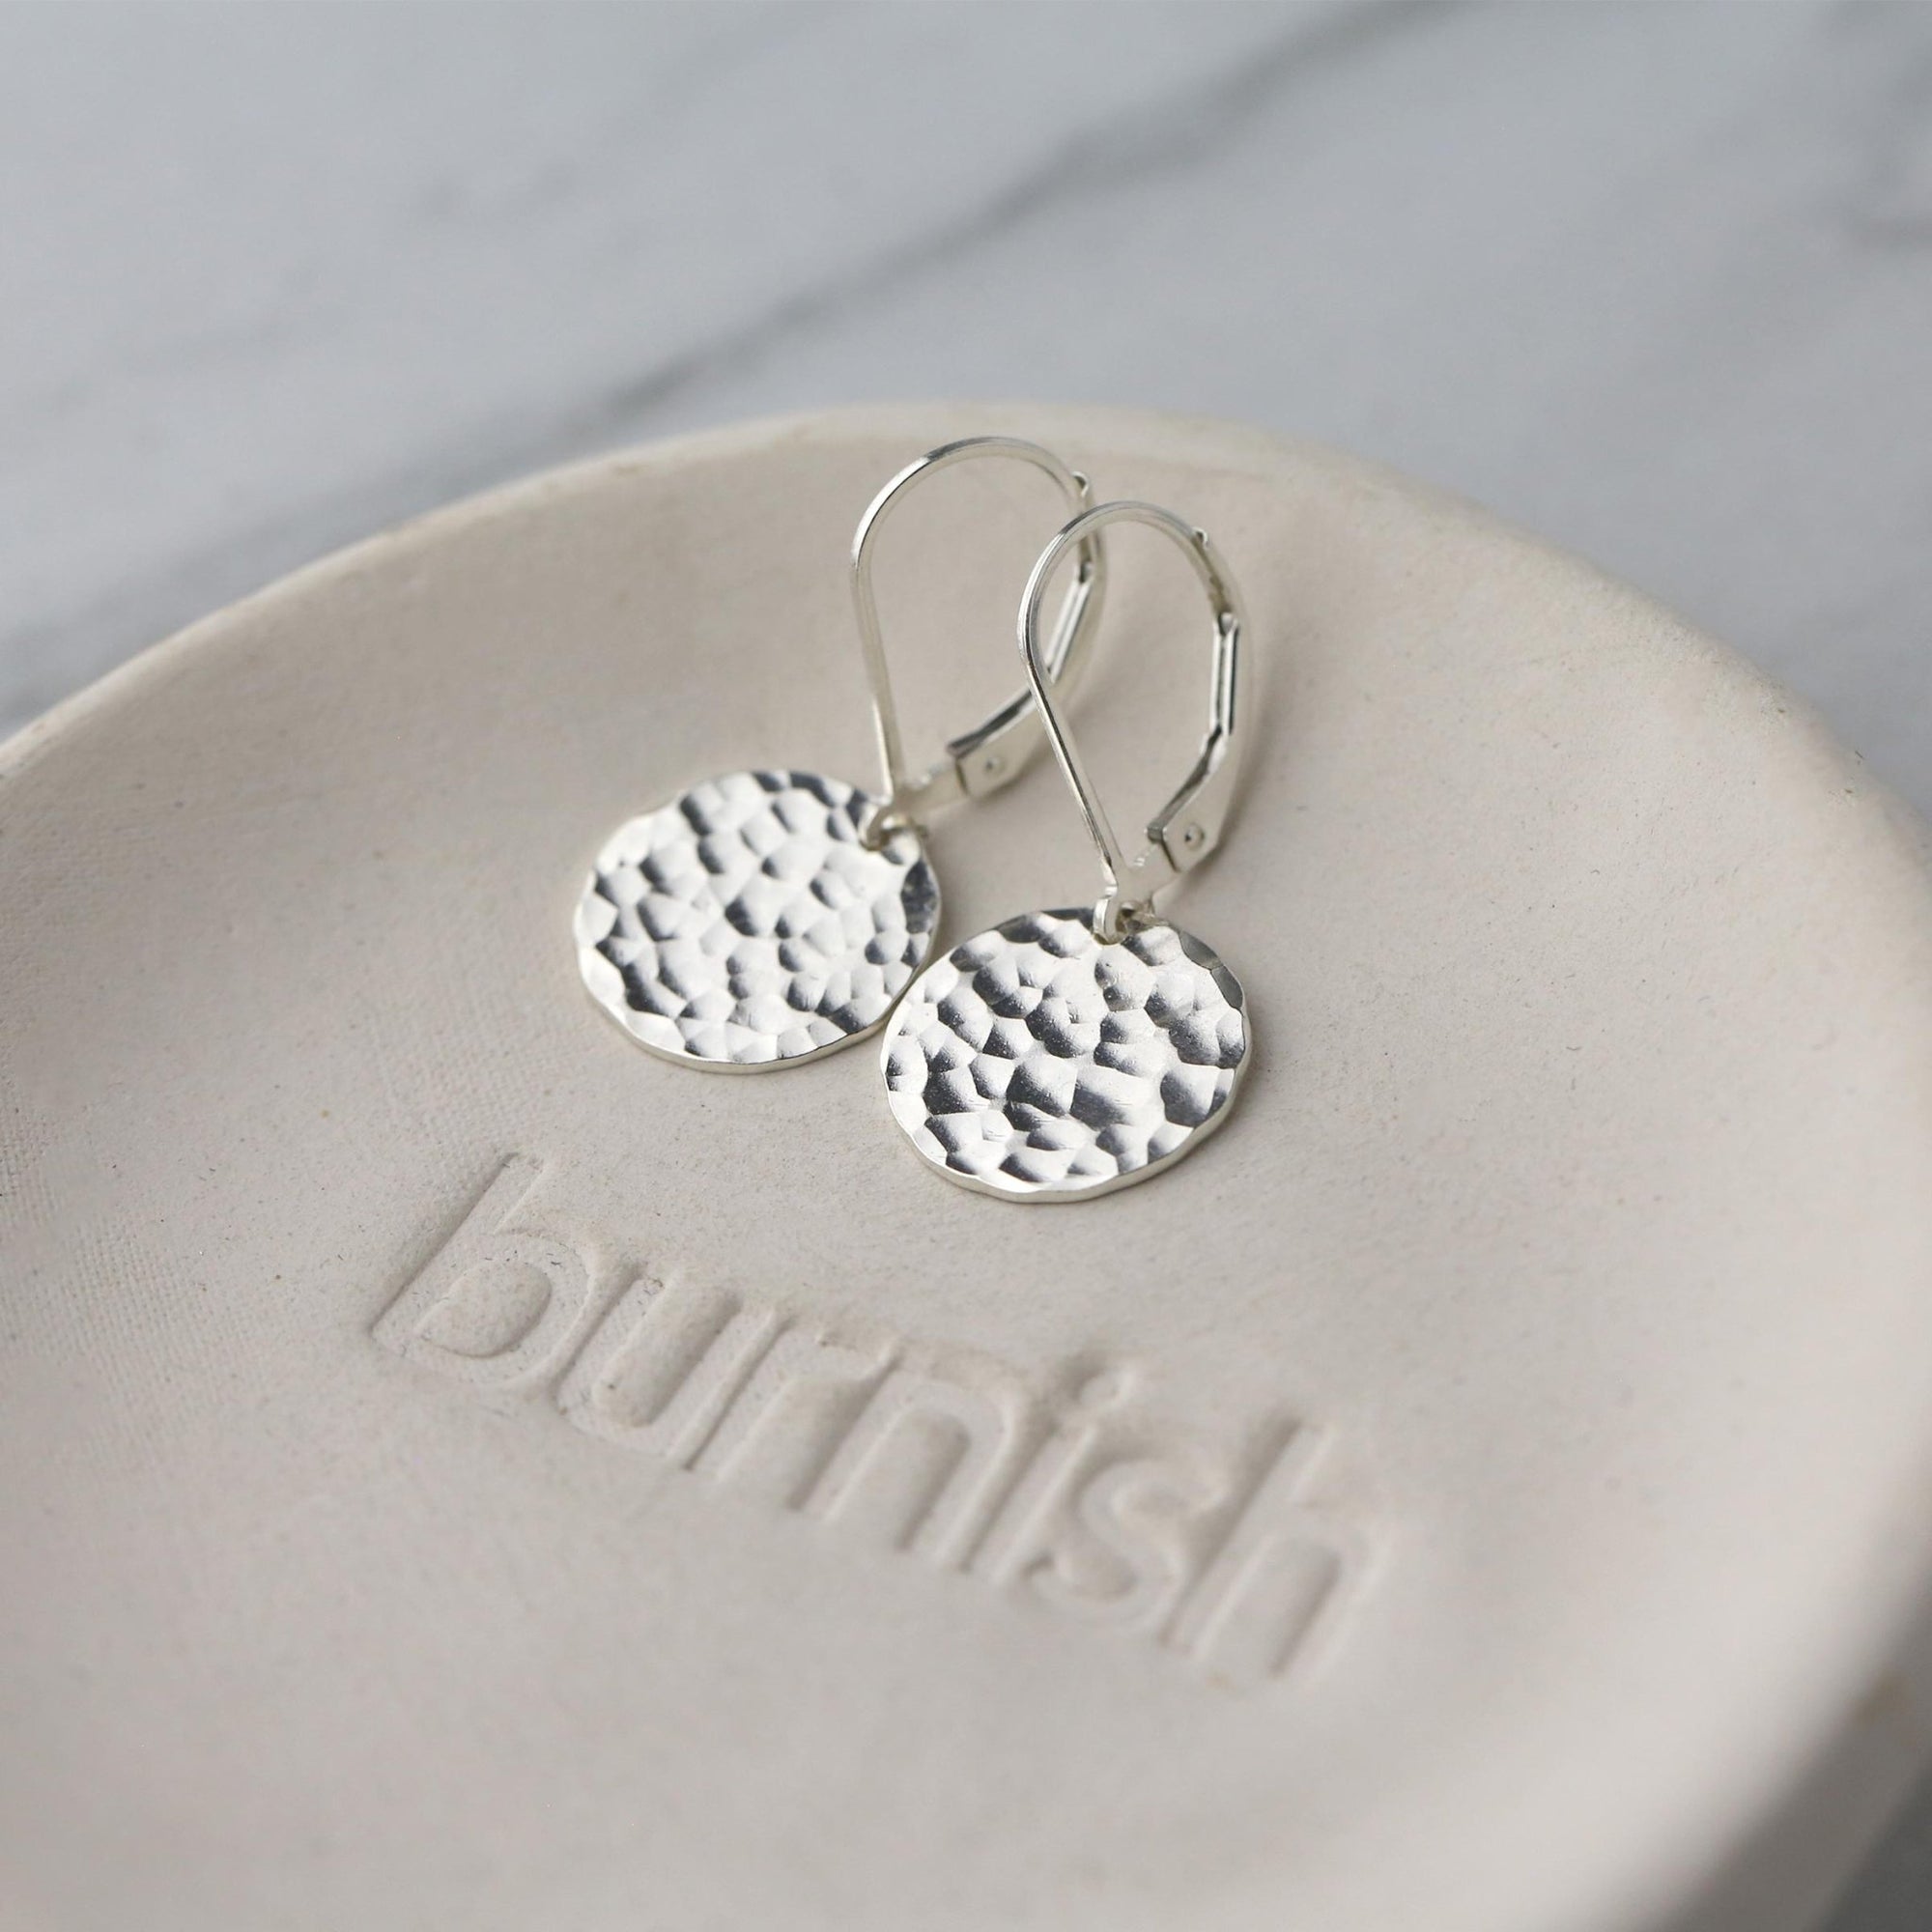 Medium Silver Hammered Disc Lever-back Earrings handmade by Burnish